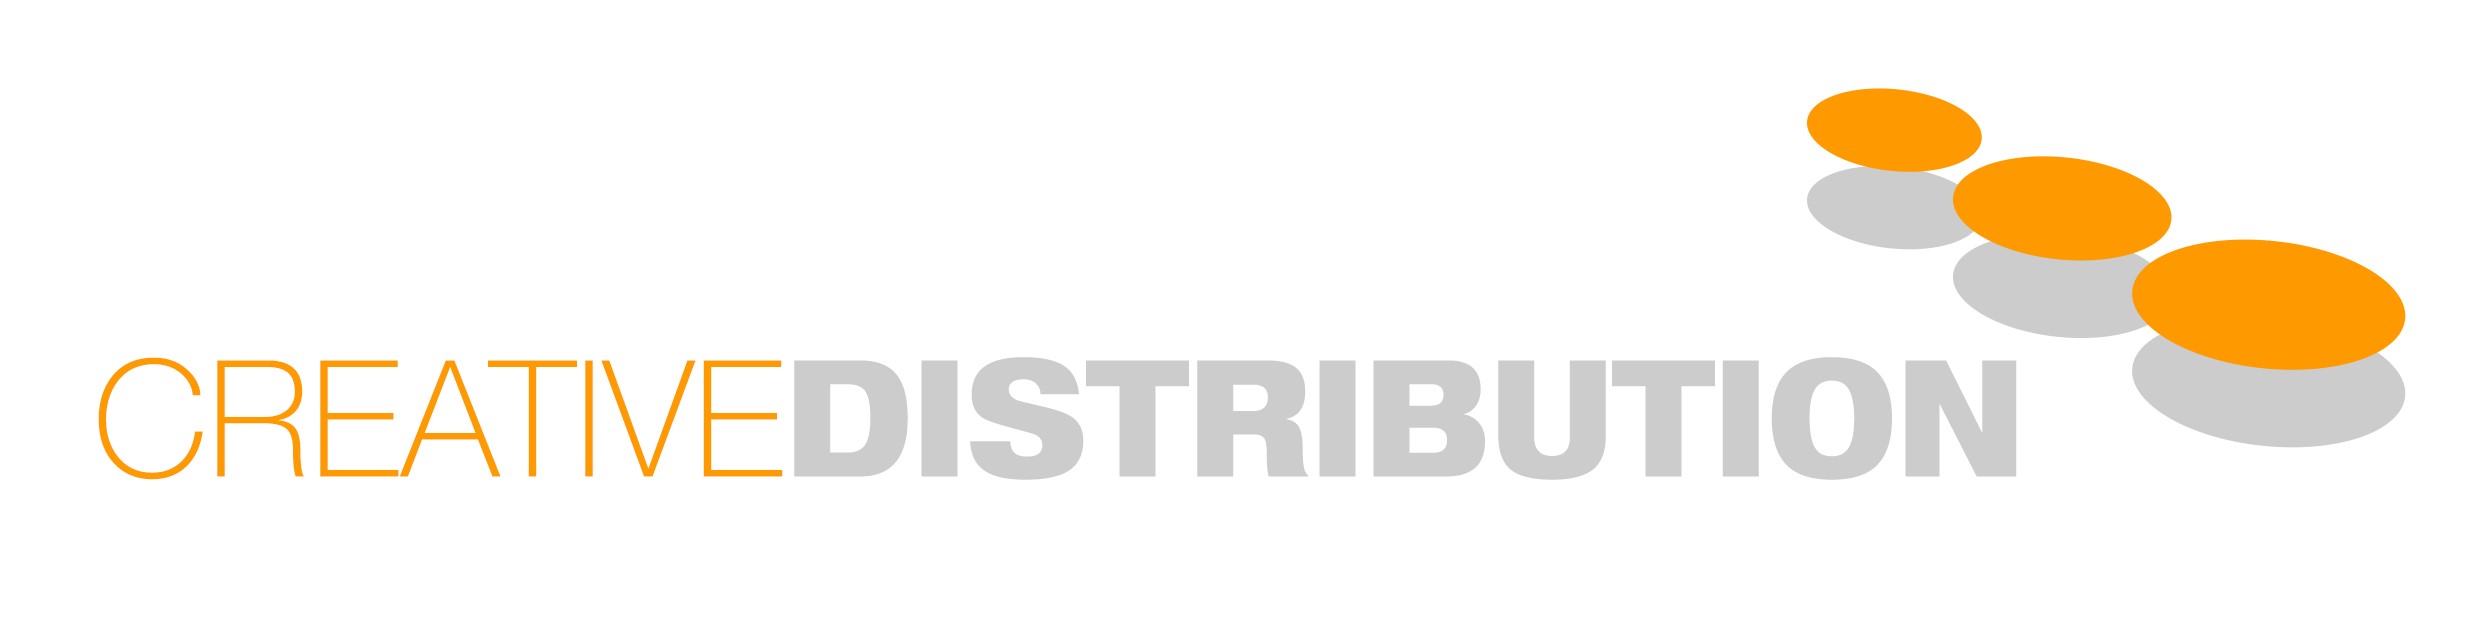 Creative distribution logo